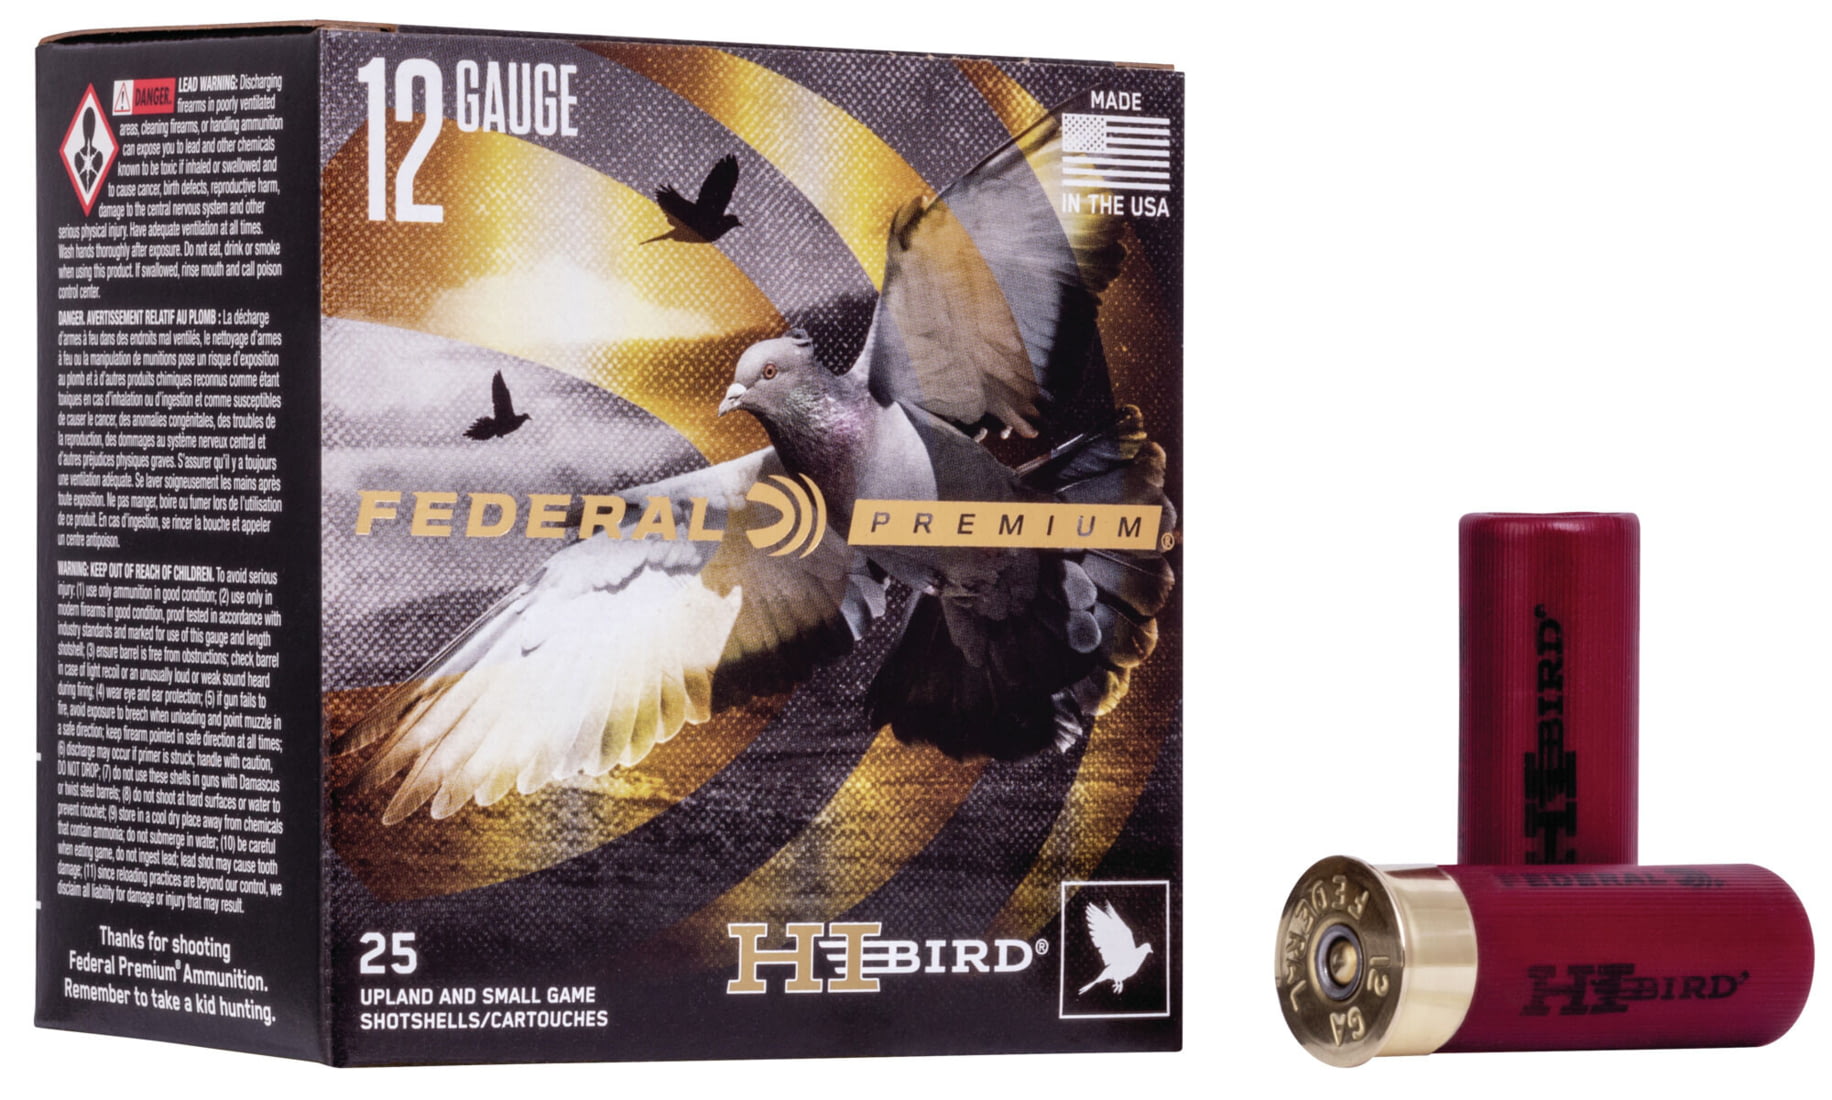 Federal Premium HI-BIRD 12 Gauge 1.125 oz Hi-Bird Centerfire Shotgun Ammunition